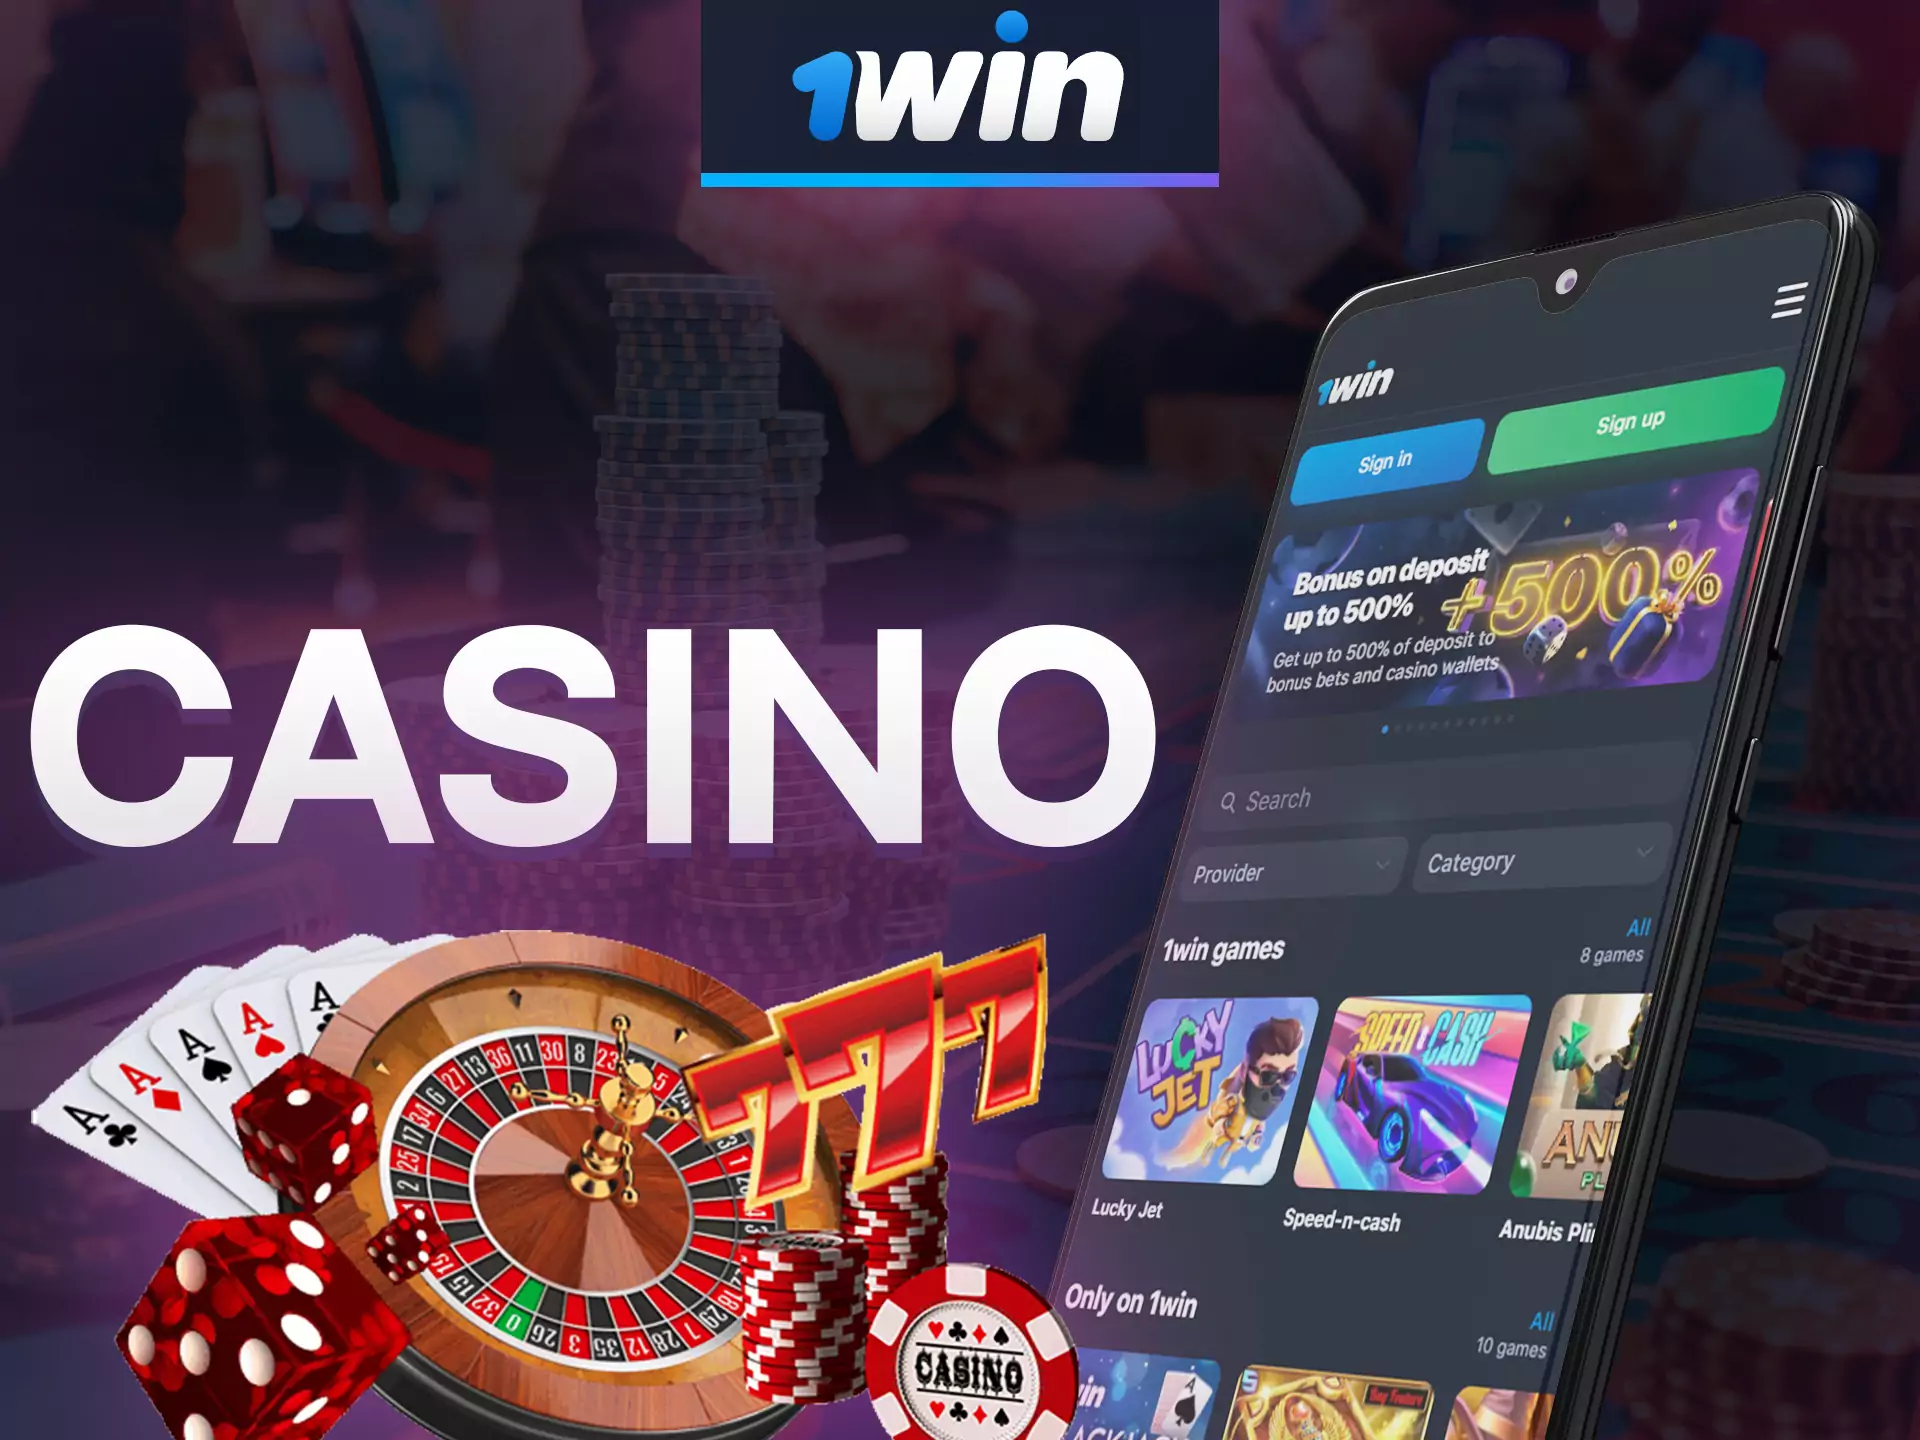 Play casino games using 1win app.